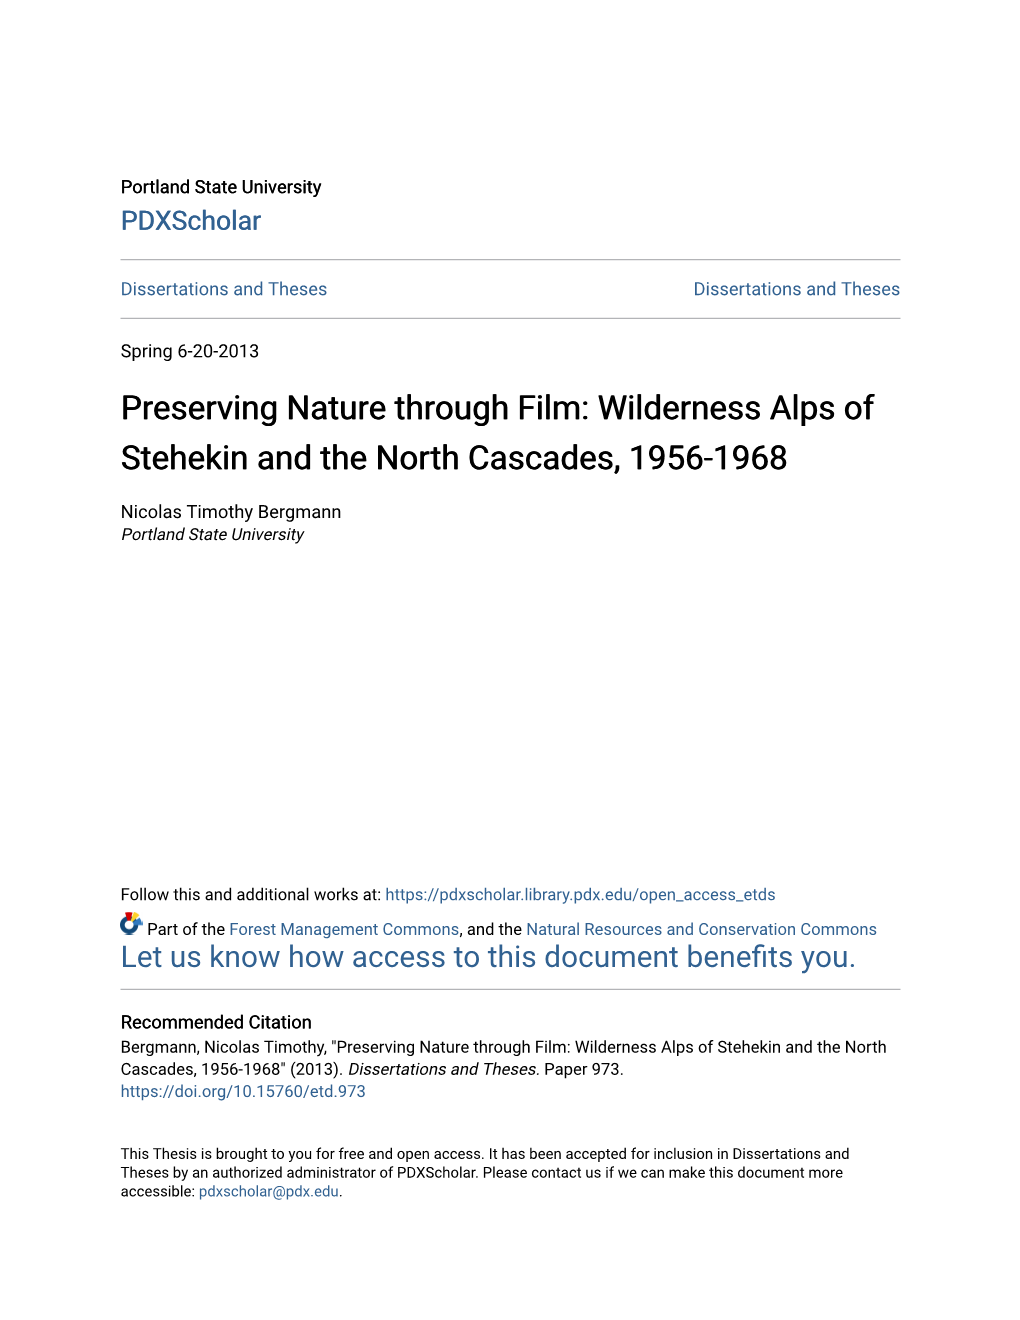 Wilderness Alps of Stehekin and the North Cascades, 1956-1968